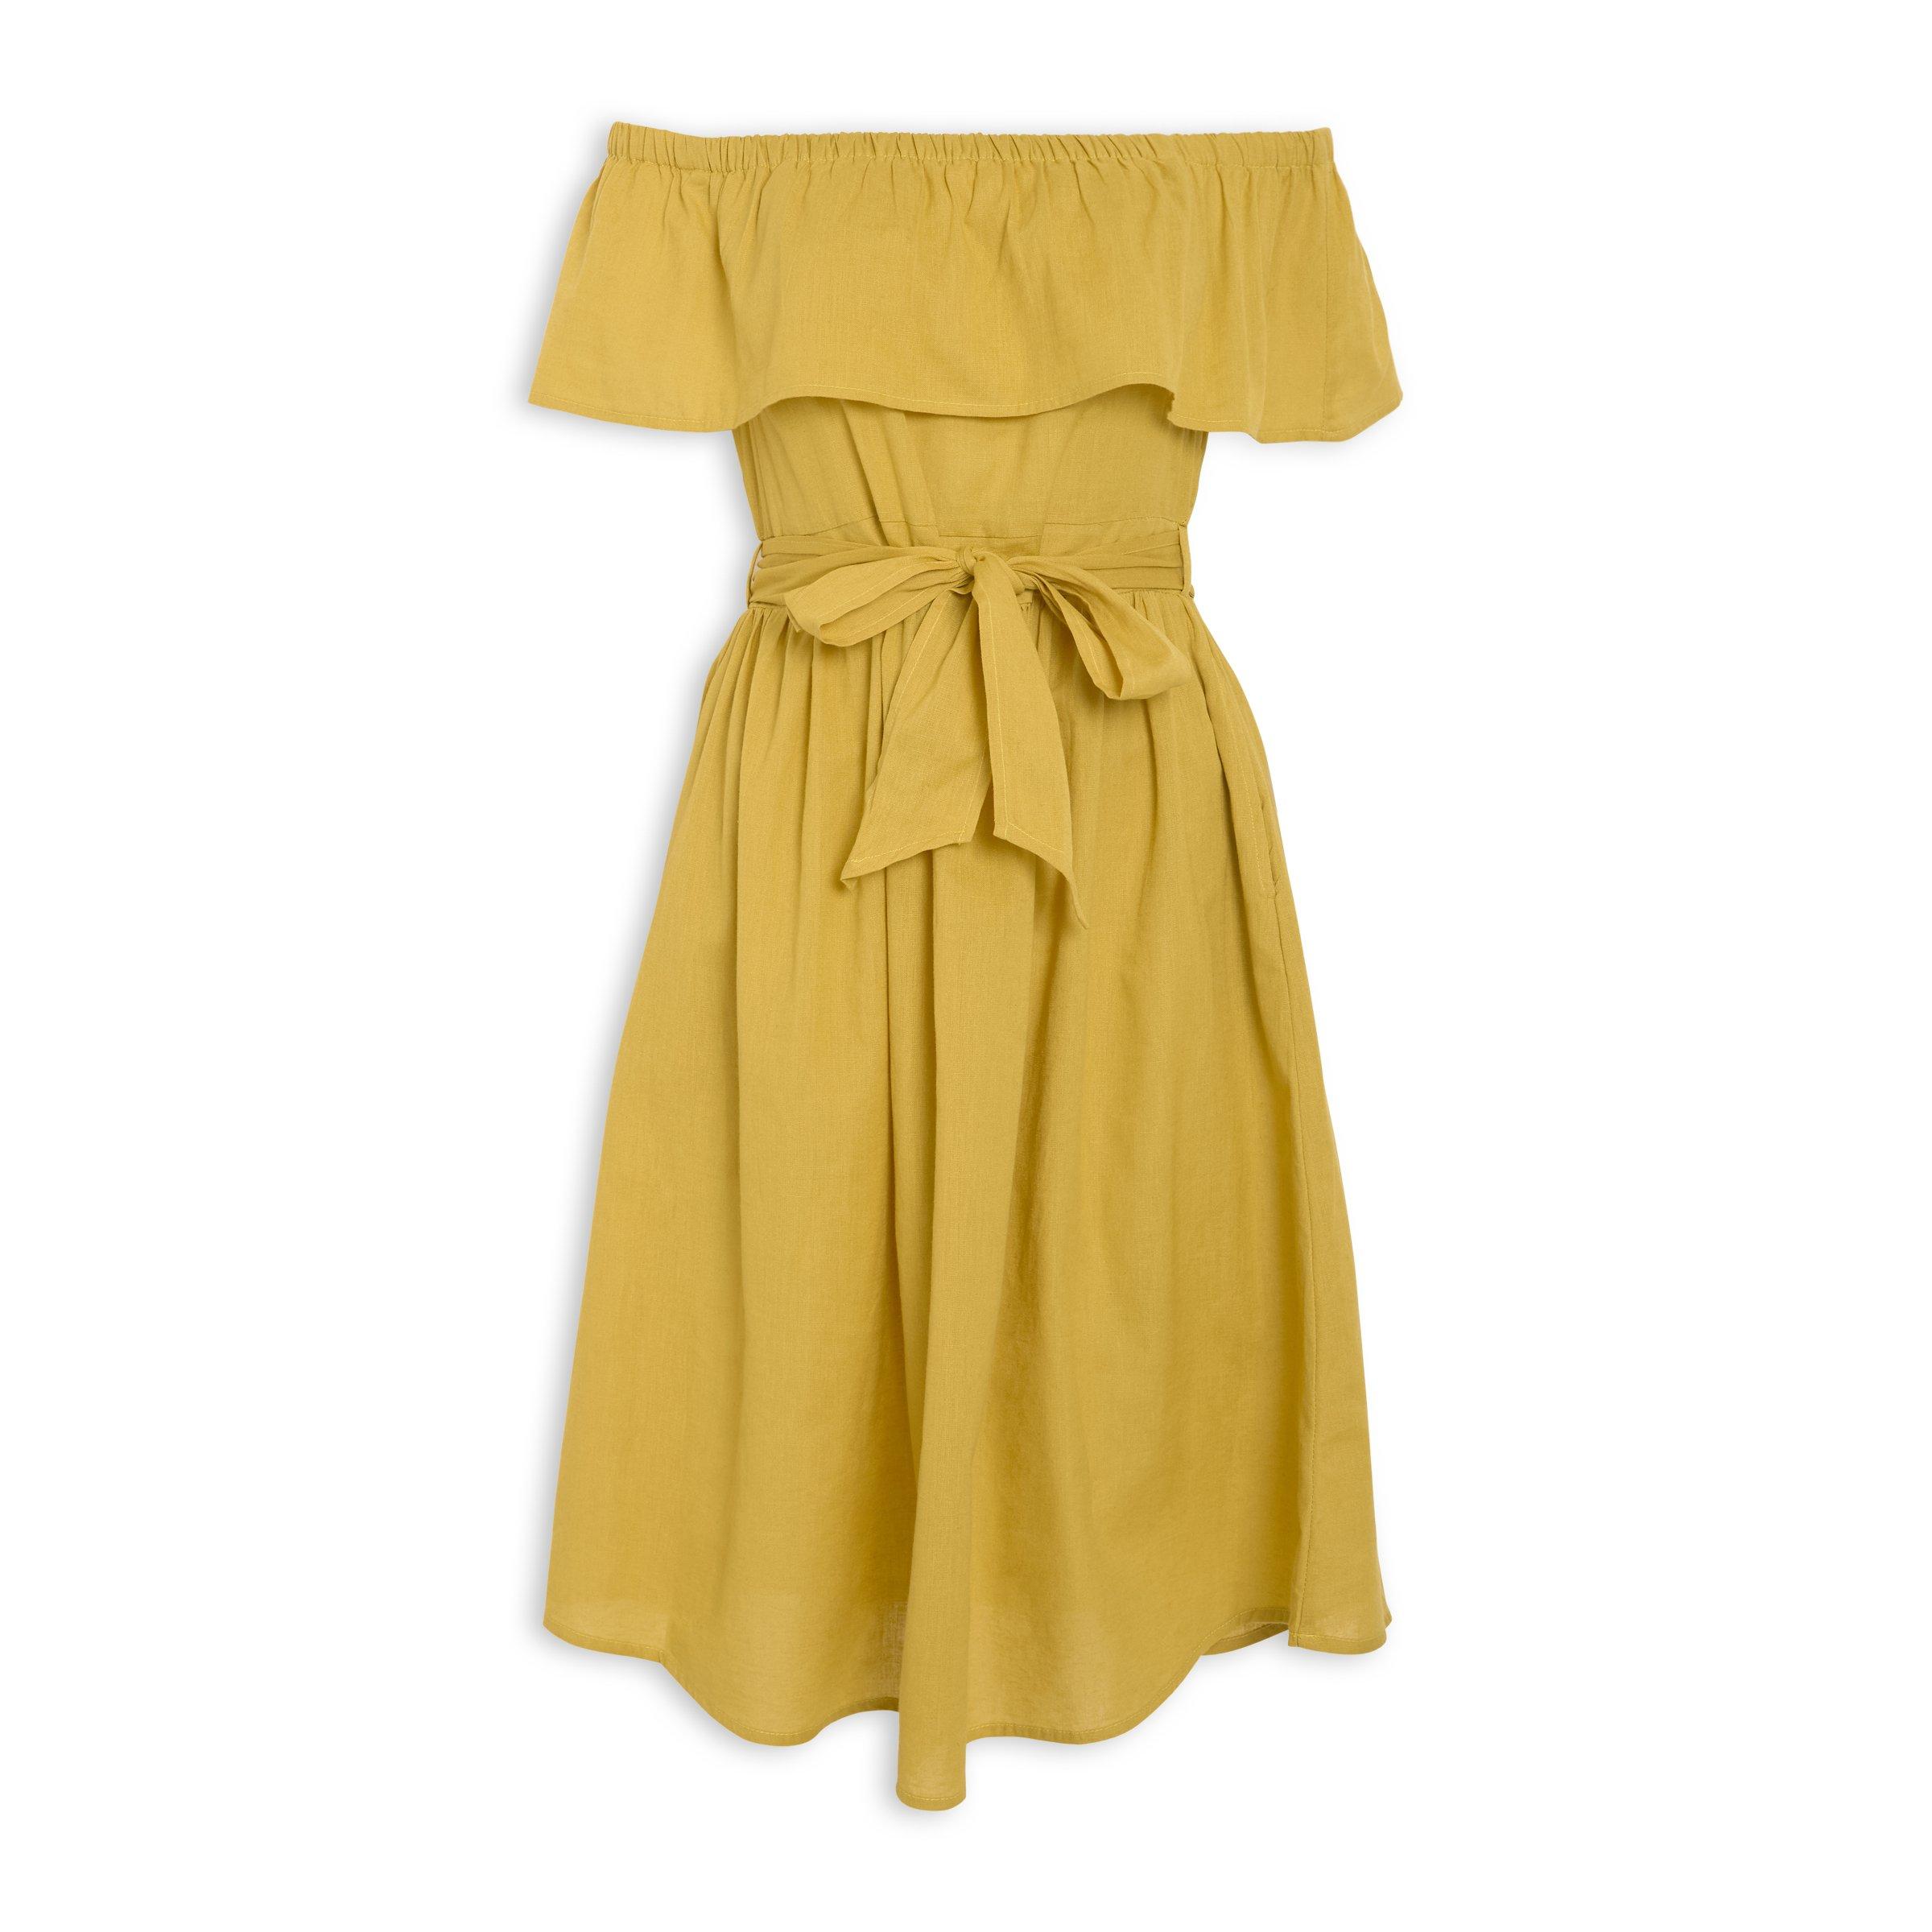 Buy Truworths Yellow Flare Dress Online 224